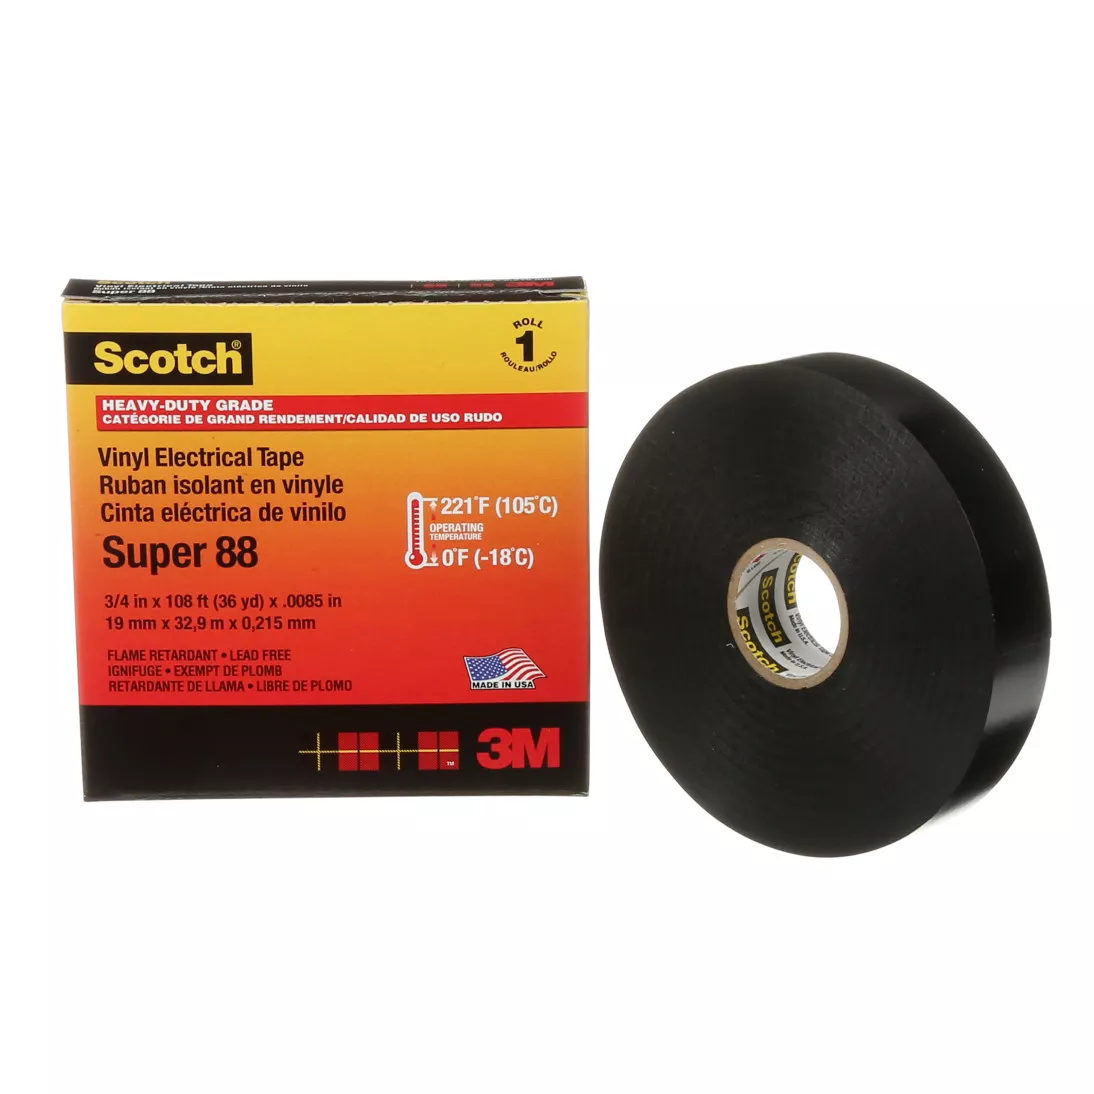 Scotch® Vinyl Electrical Tape Super 88, 3/4 in x 36 yd, Black, 12
rolls/carton, 48 rolls/Case